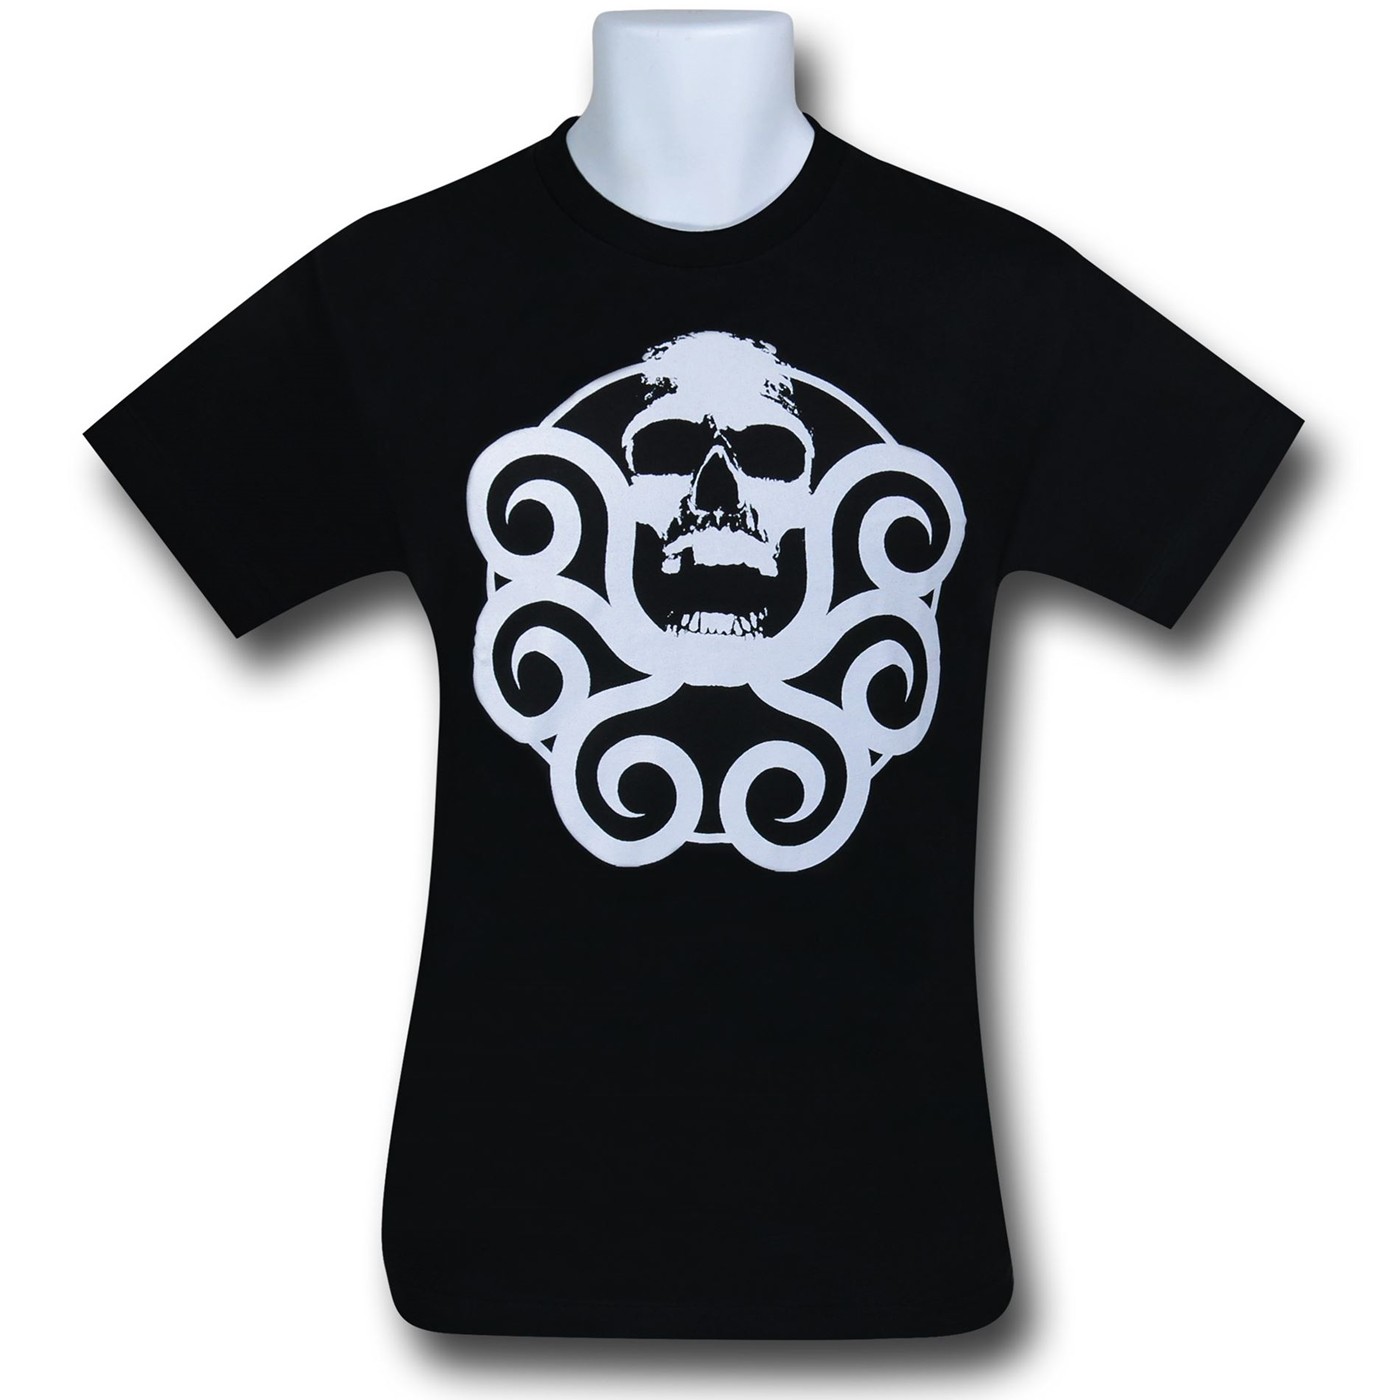 Hydra White Symbol on Black T-Shirt